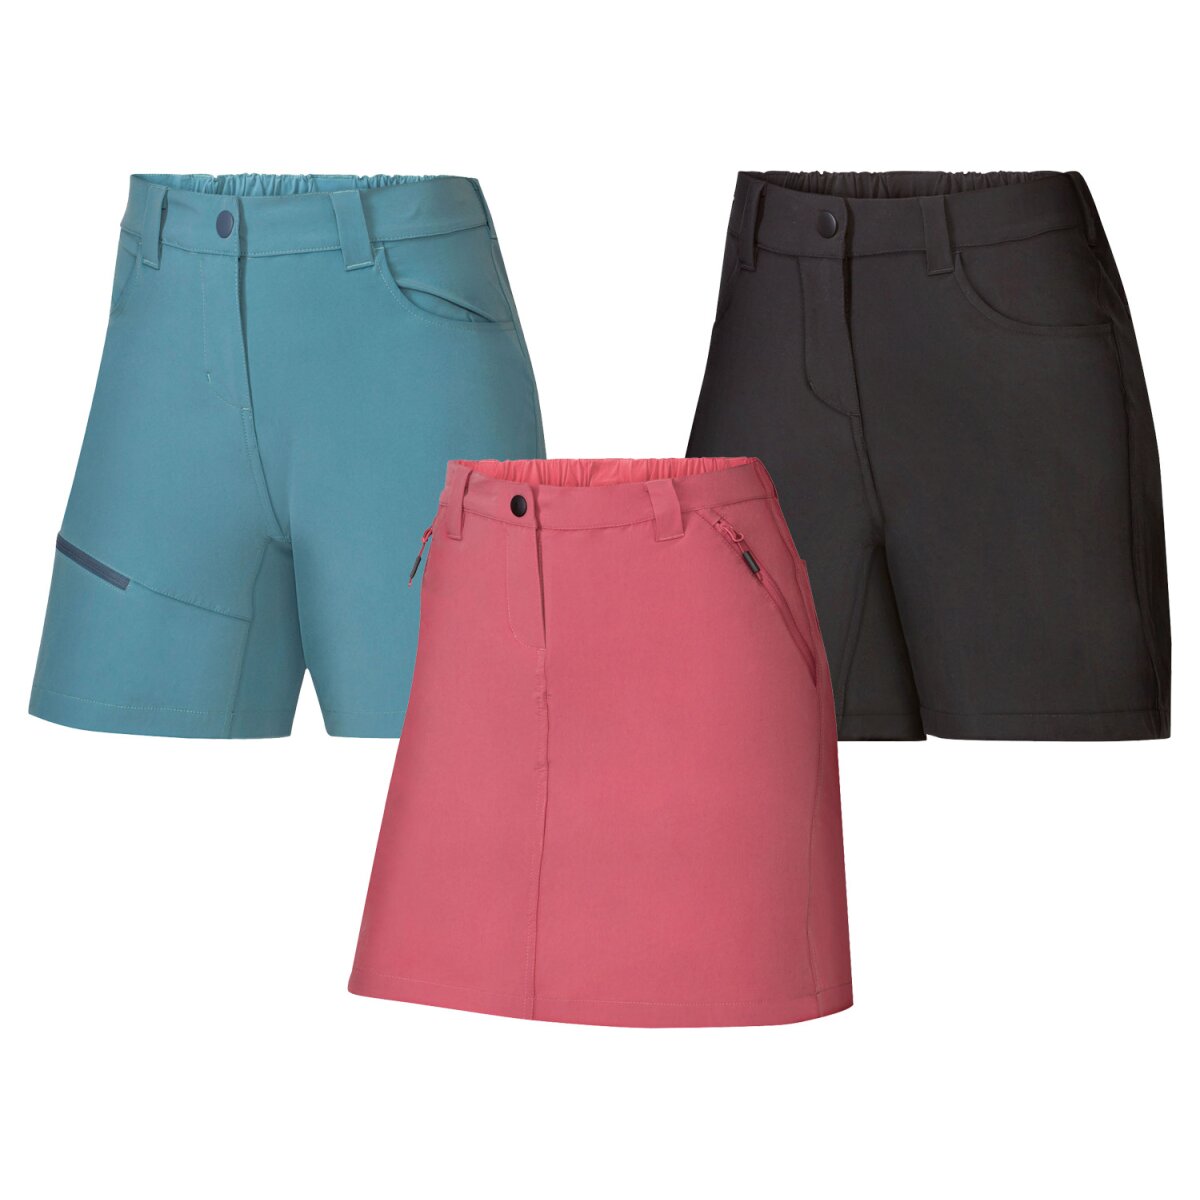 Rocktrail Damen Funktionsrock/-shorts, imprägniert - B-Ware, 7,99 €